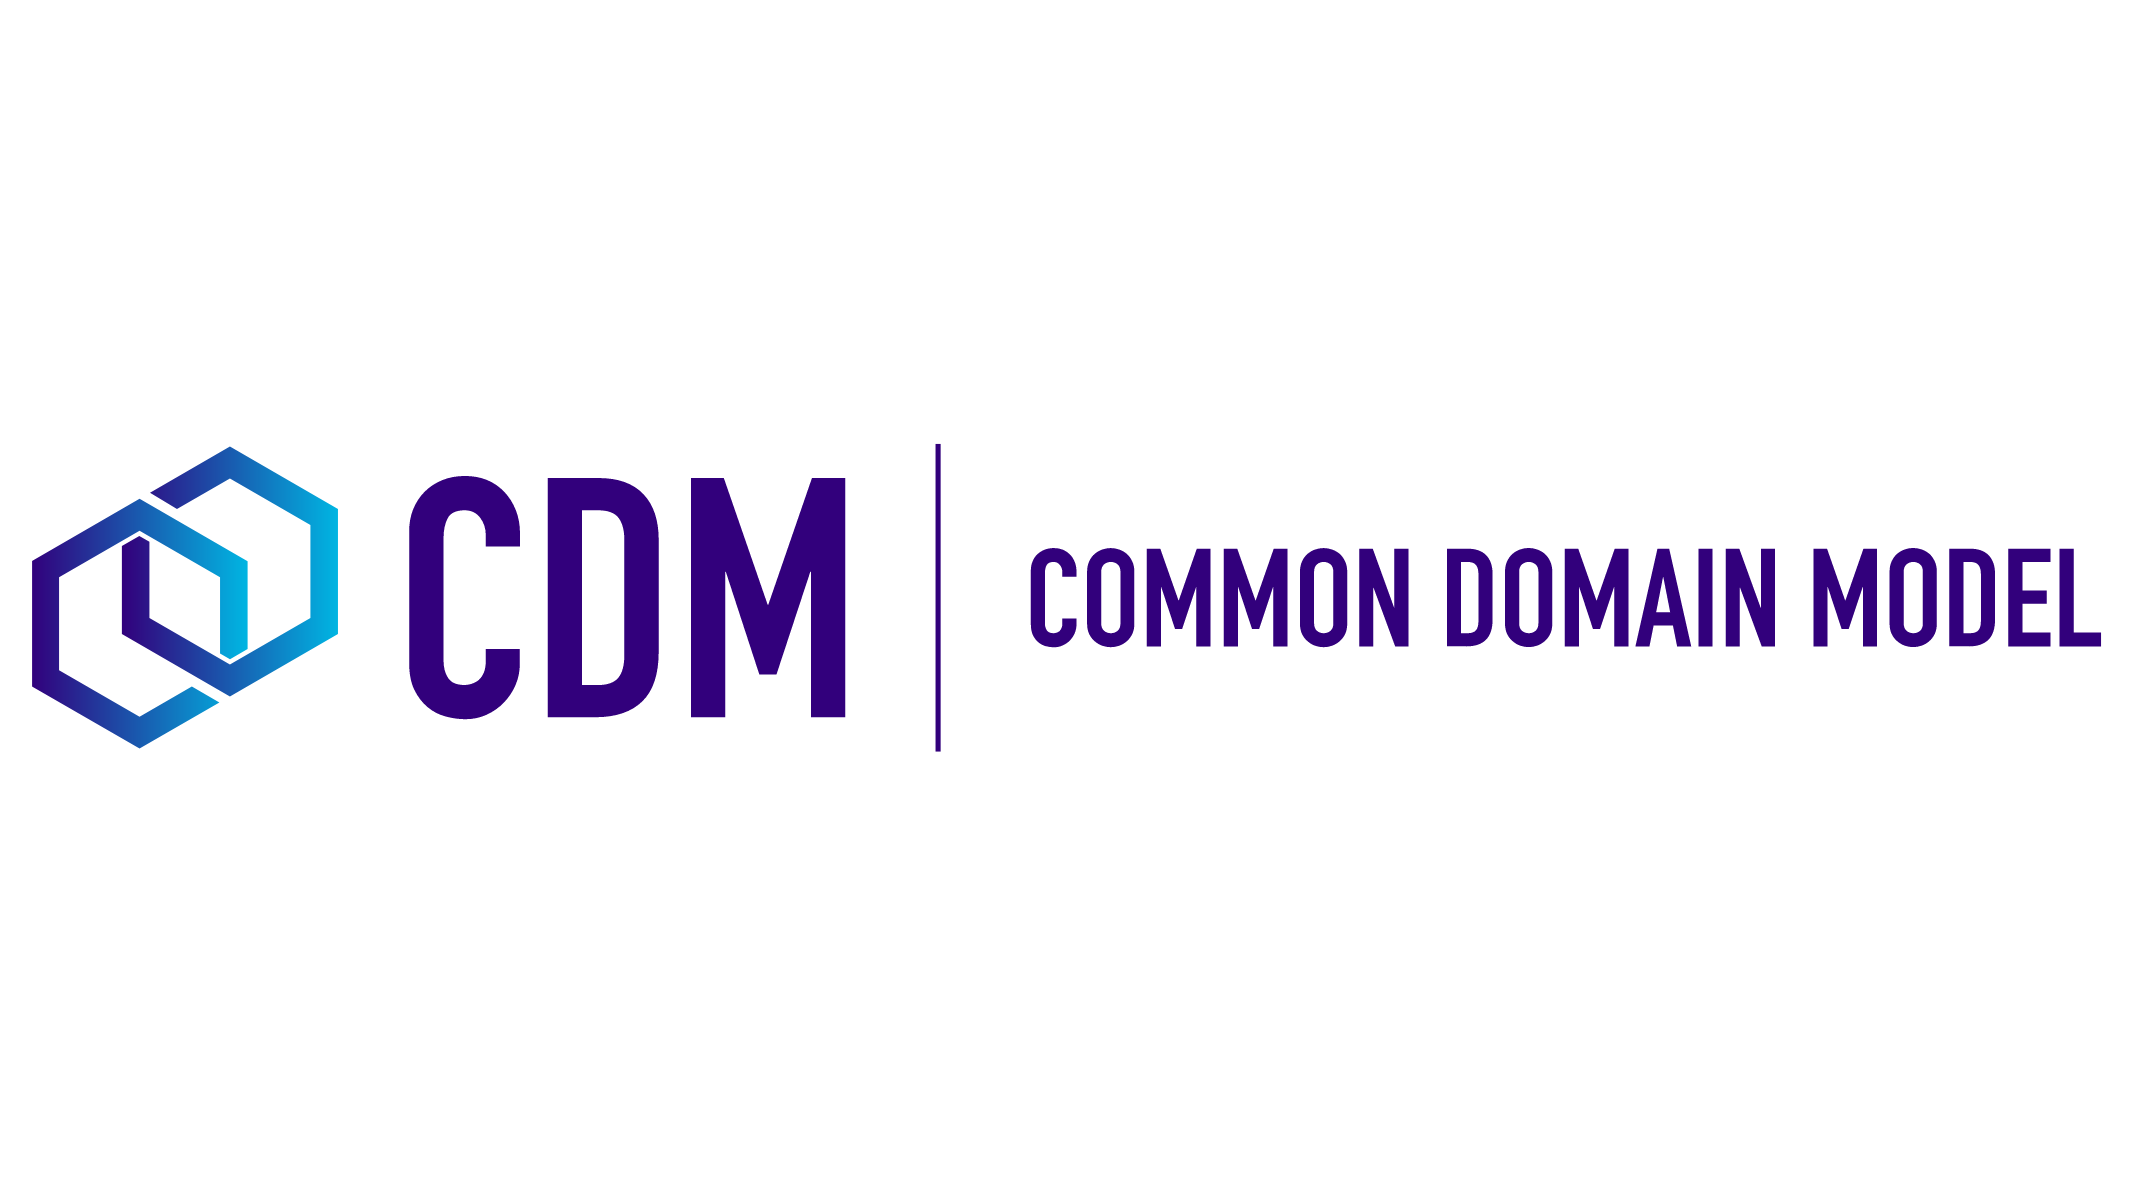 Common Domain Model (CDM) – Landing page